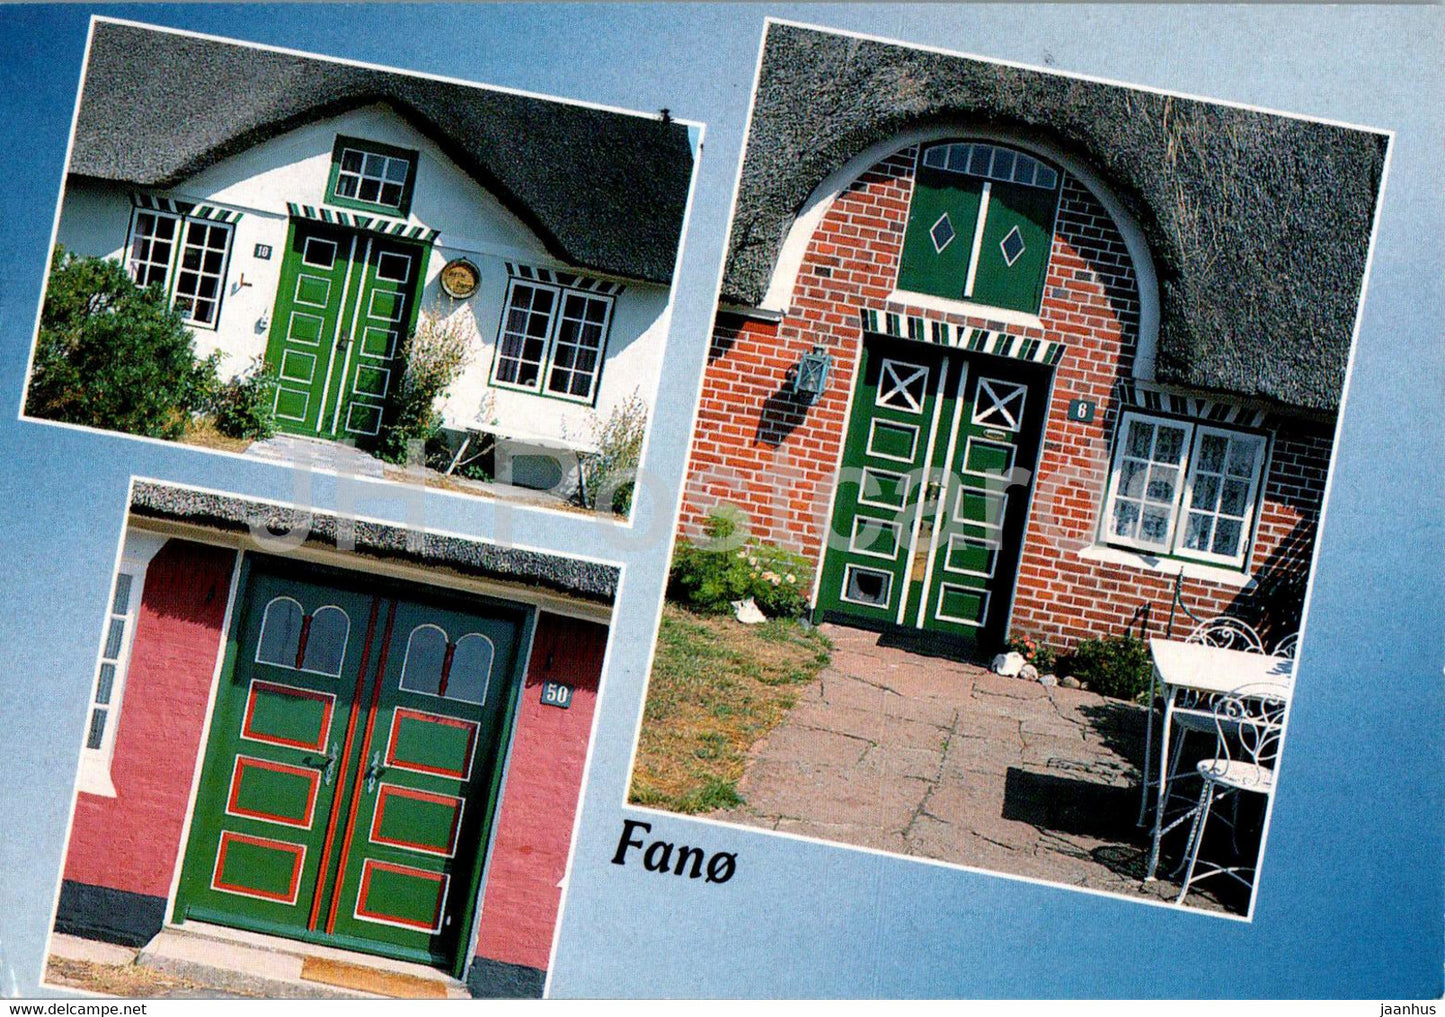 Fano - Dorpartier fra Sonderho - doors - multiview - 9344 - 1993 - Denmark - used - JH Postcards